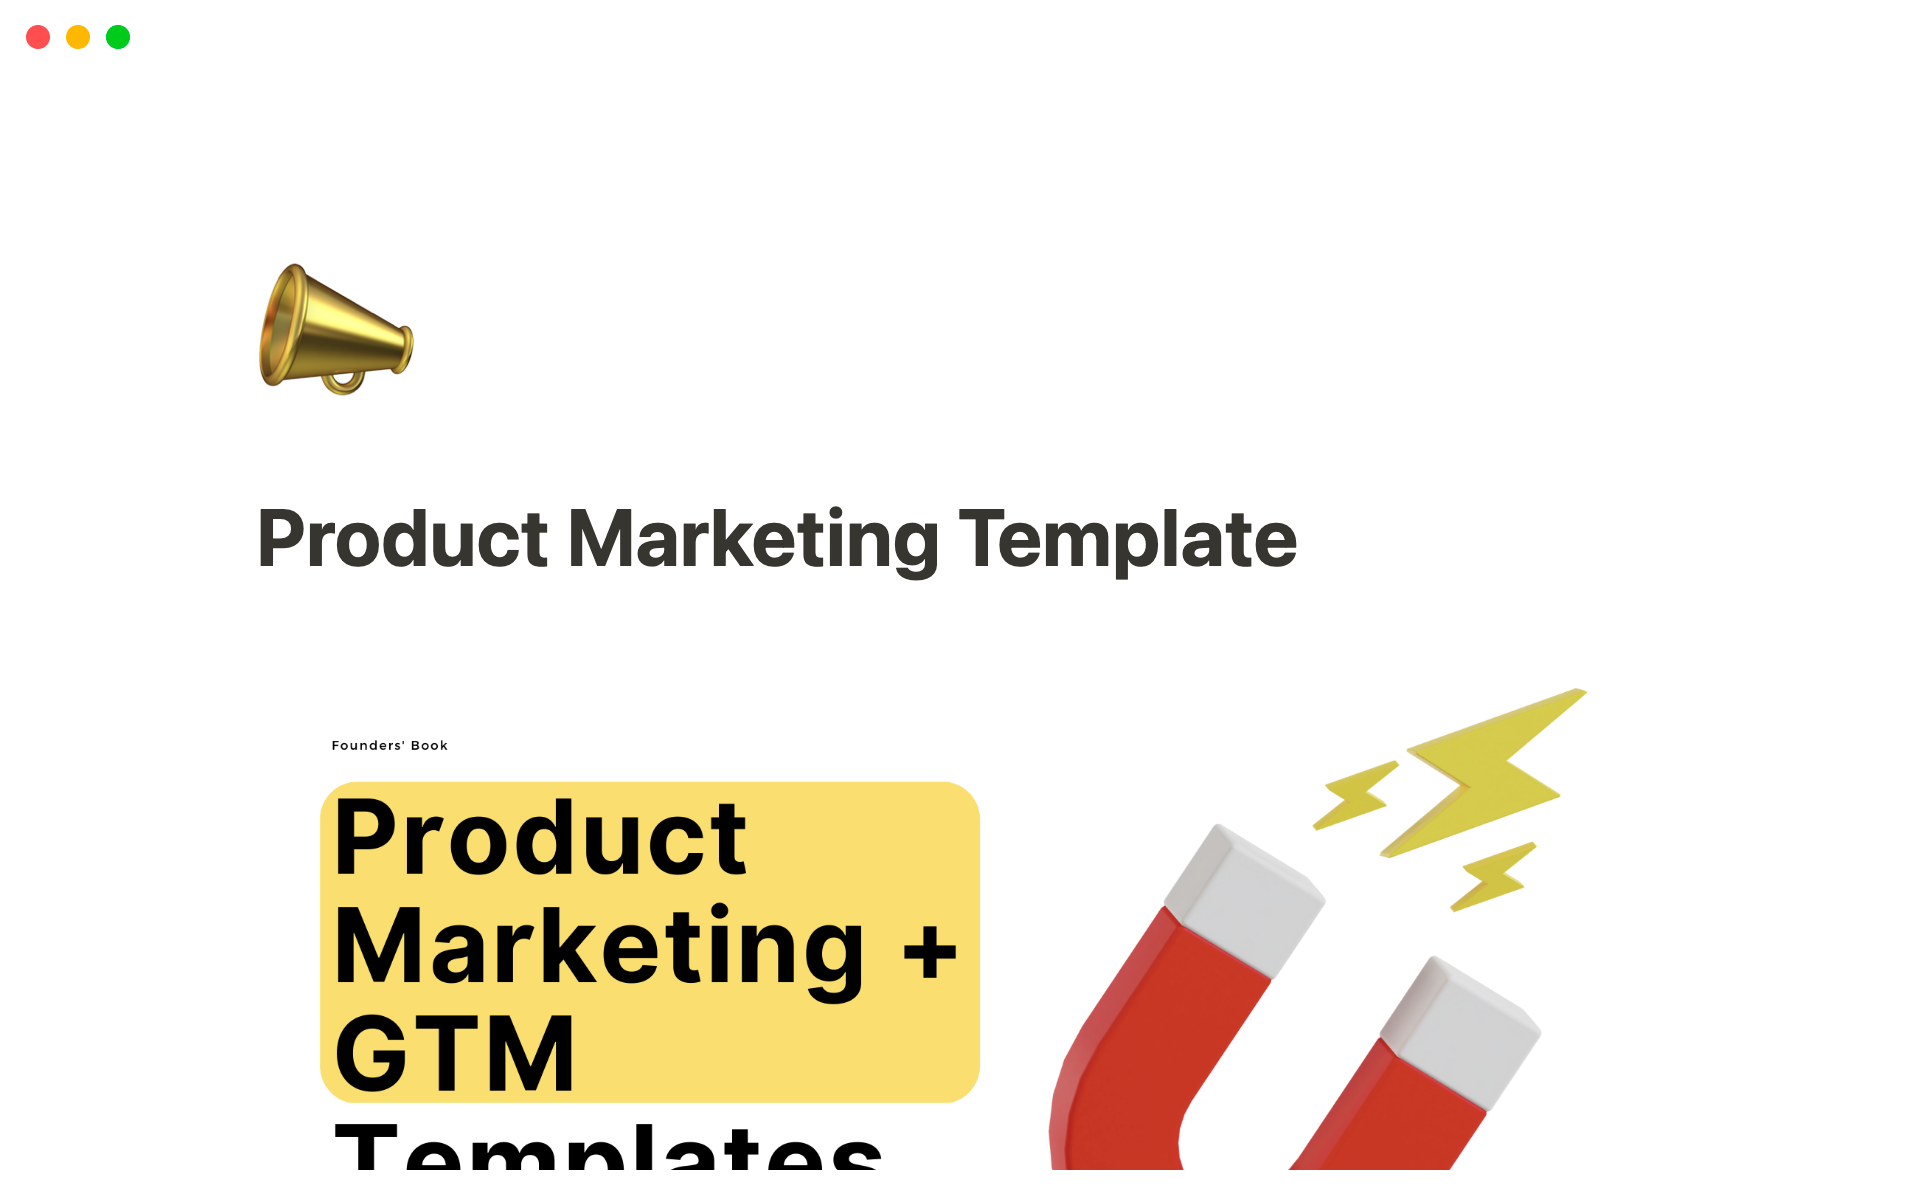 Vista previa de plantilla para Product Marketing + GTM Template